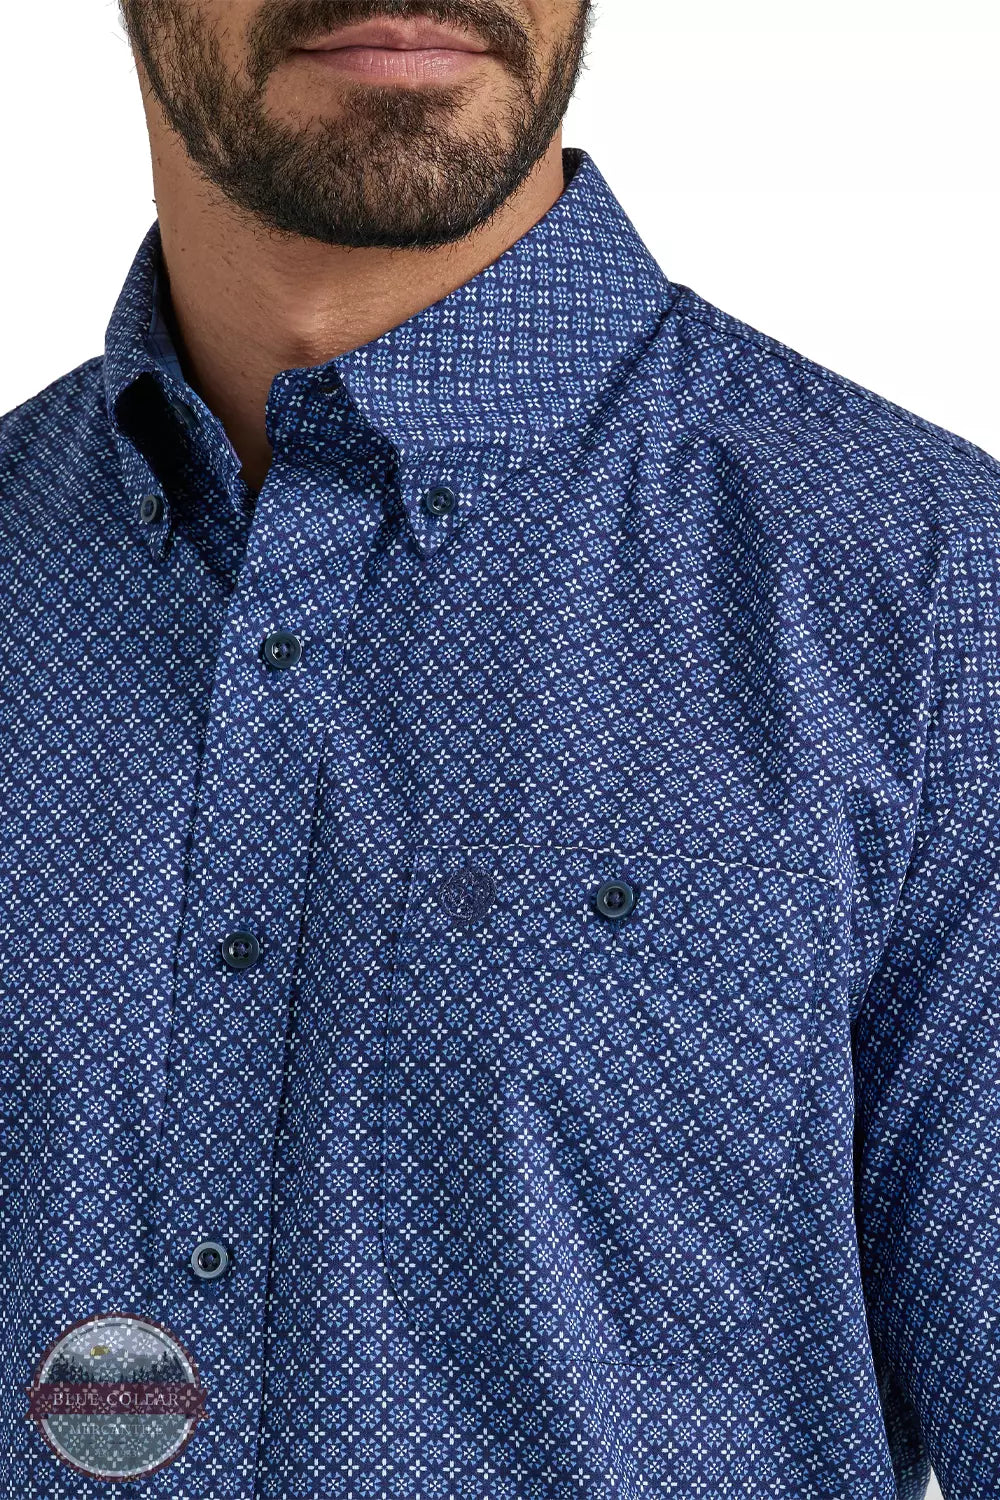 Wrangler 112338099 George Strait Long Sleeve One Pocket Button Down Shirt in Midnight Splash Detail View